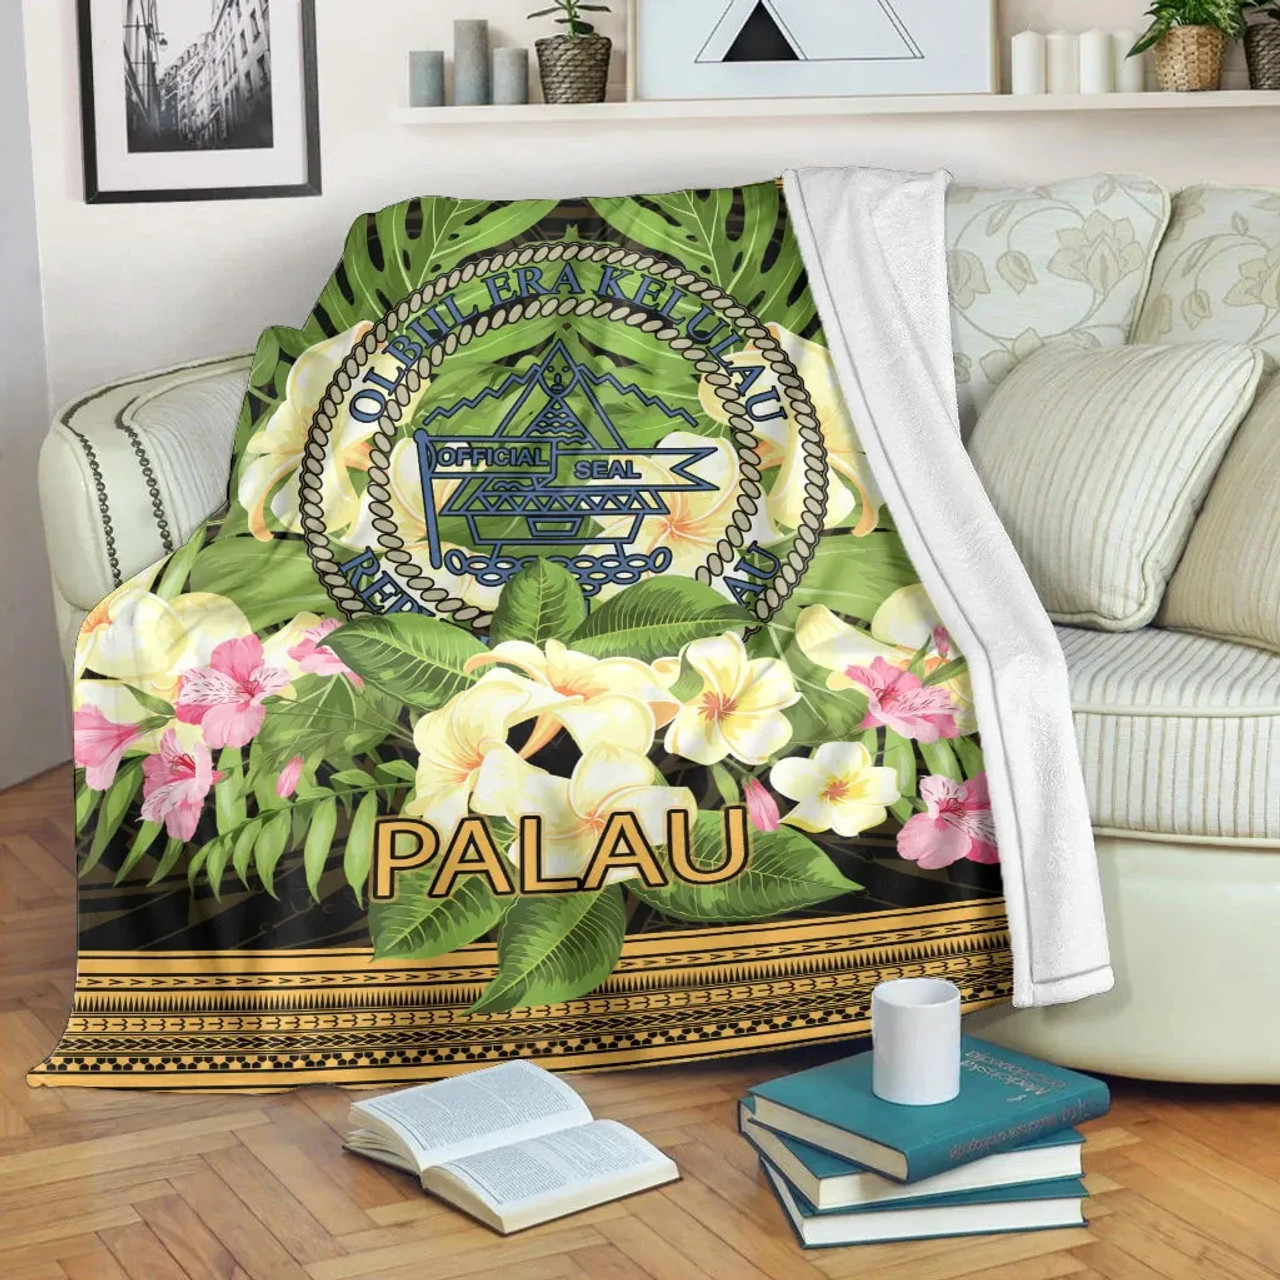 Palau Premium Blanket - Polynesian Gold Patterns Collection 1